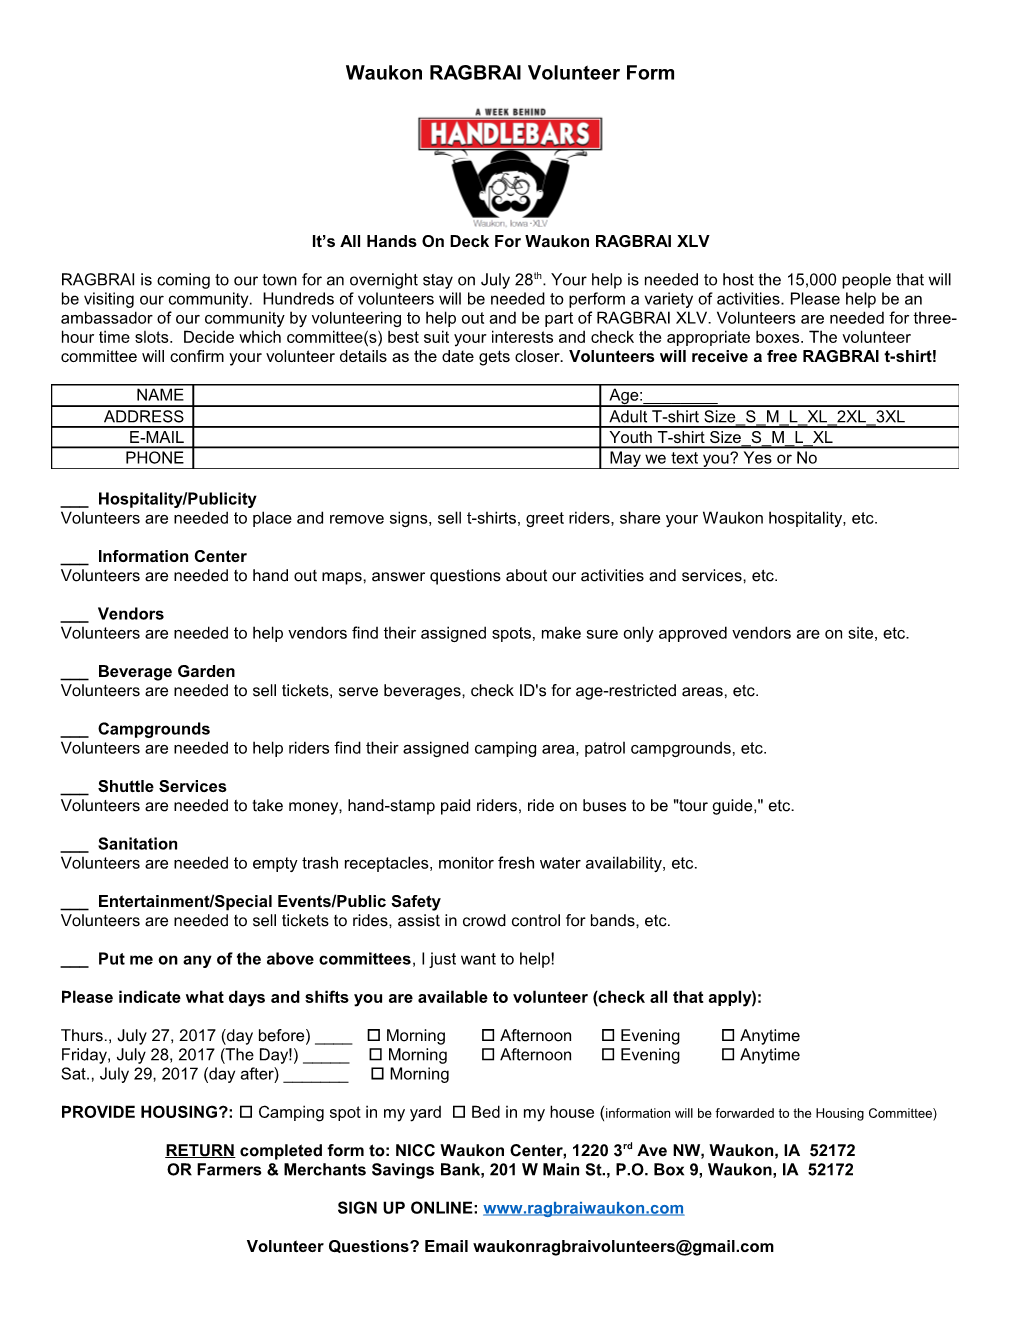 Recruitment Form (Sample 1) (CD)